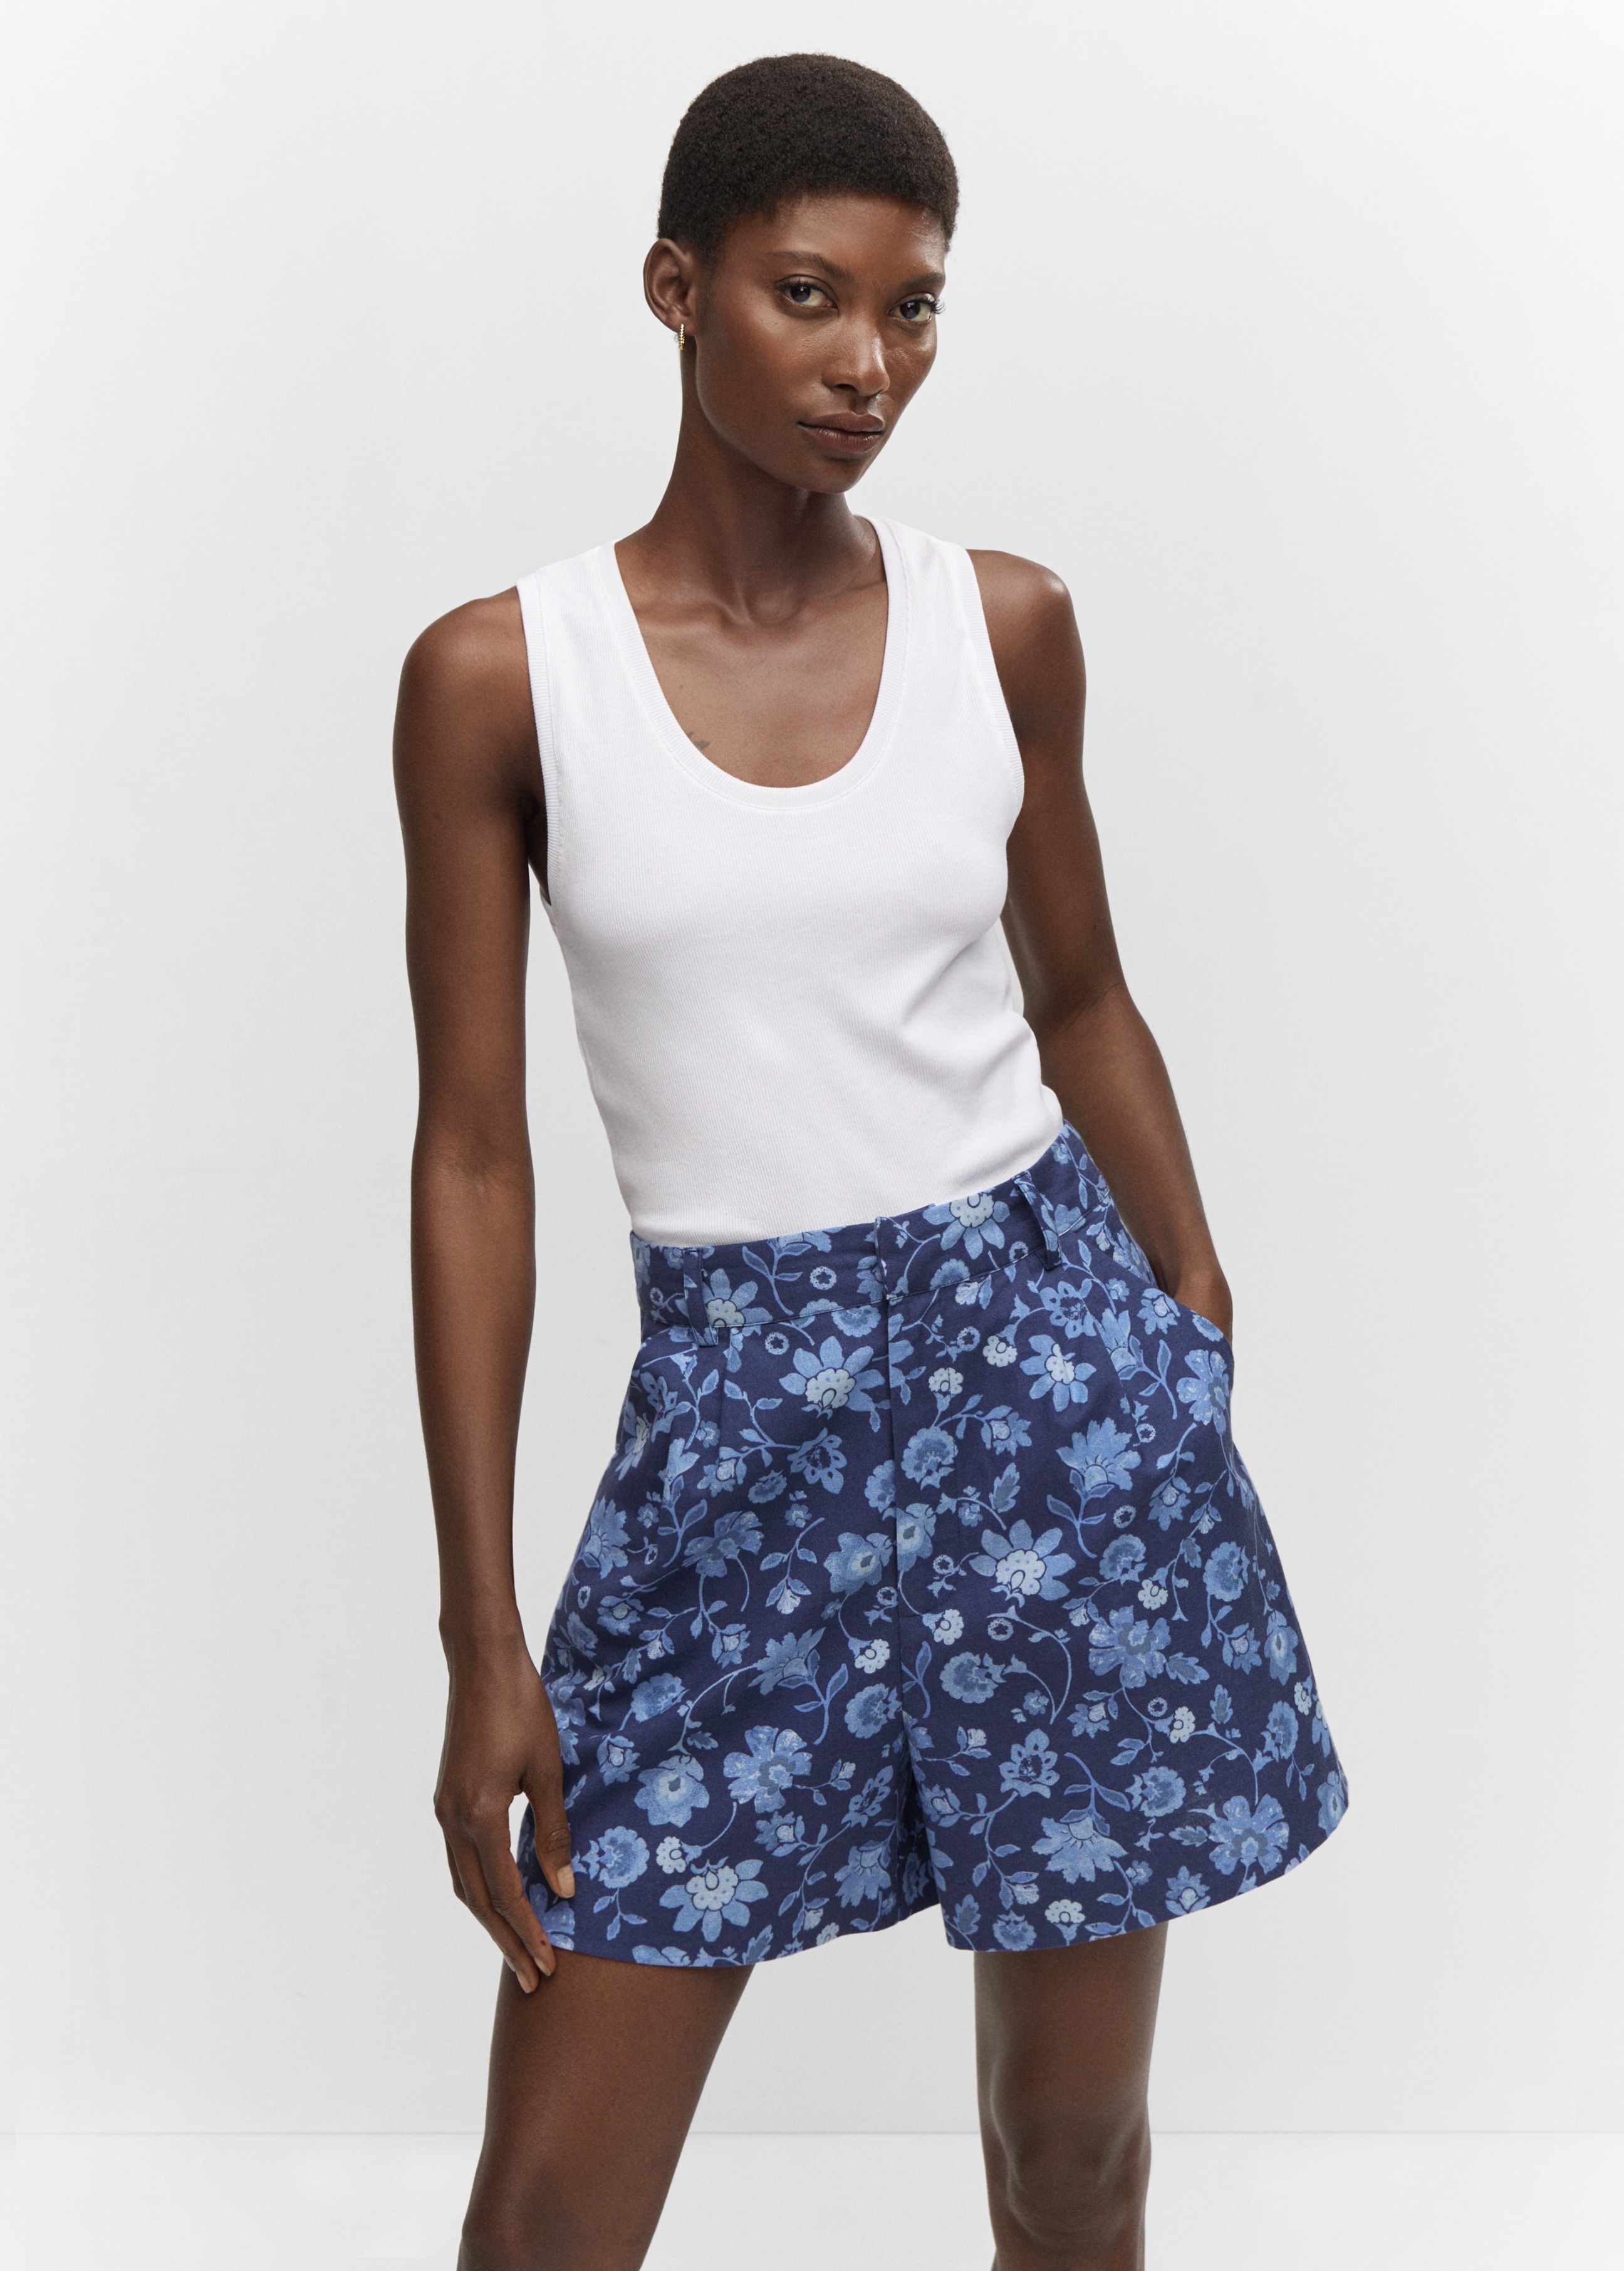 Floral-print shorts - Medium plane